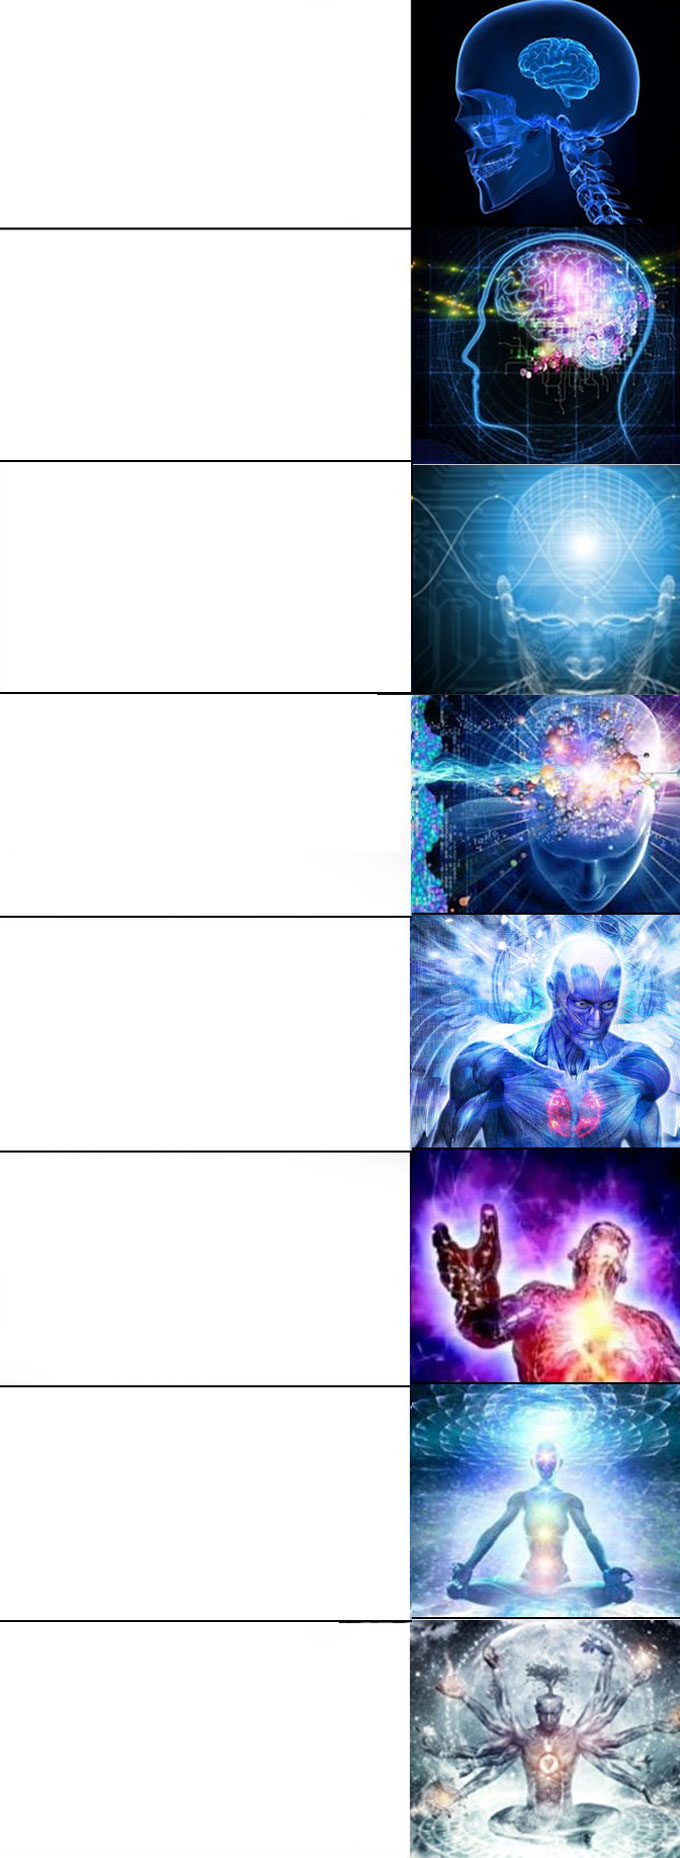 expanding brain (tall) Blank Meme Template